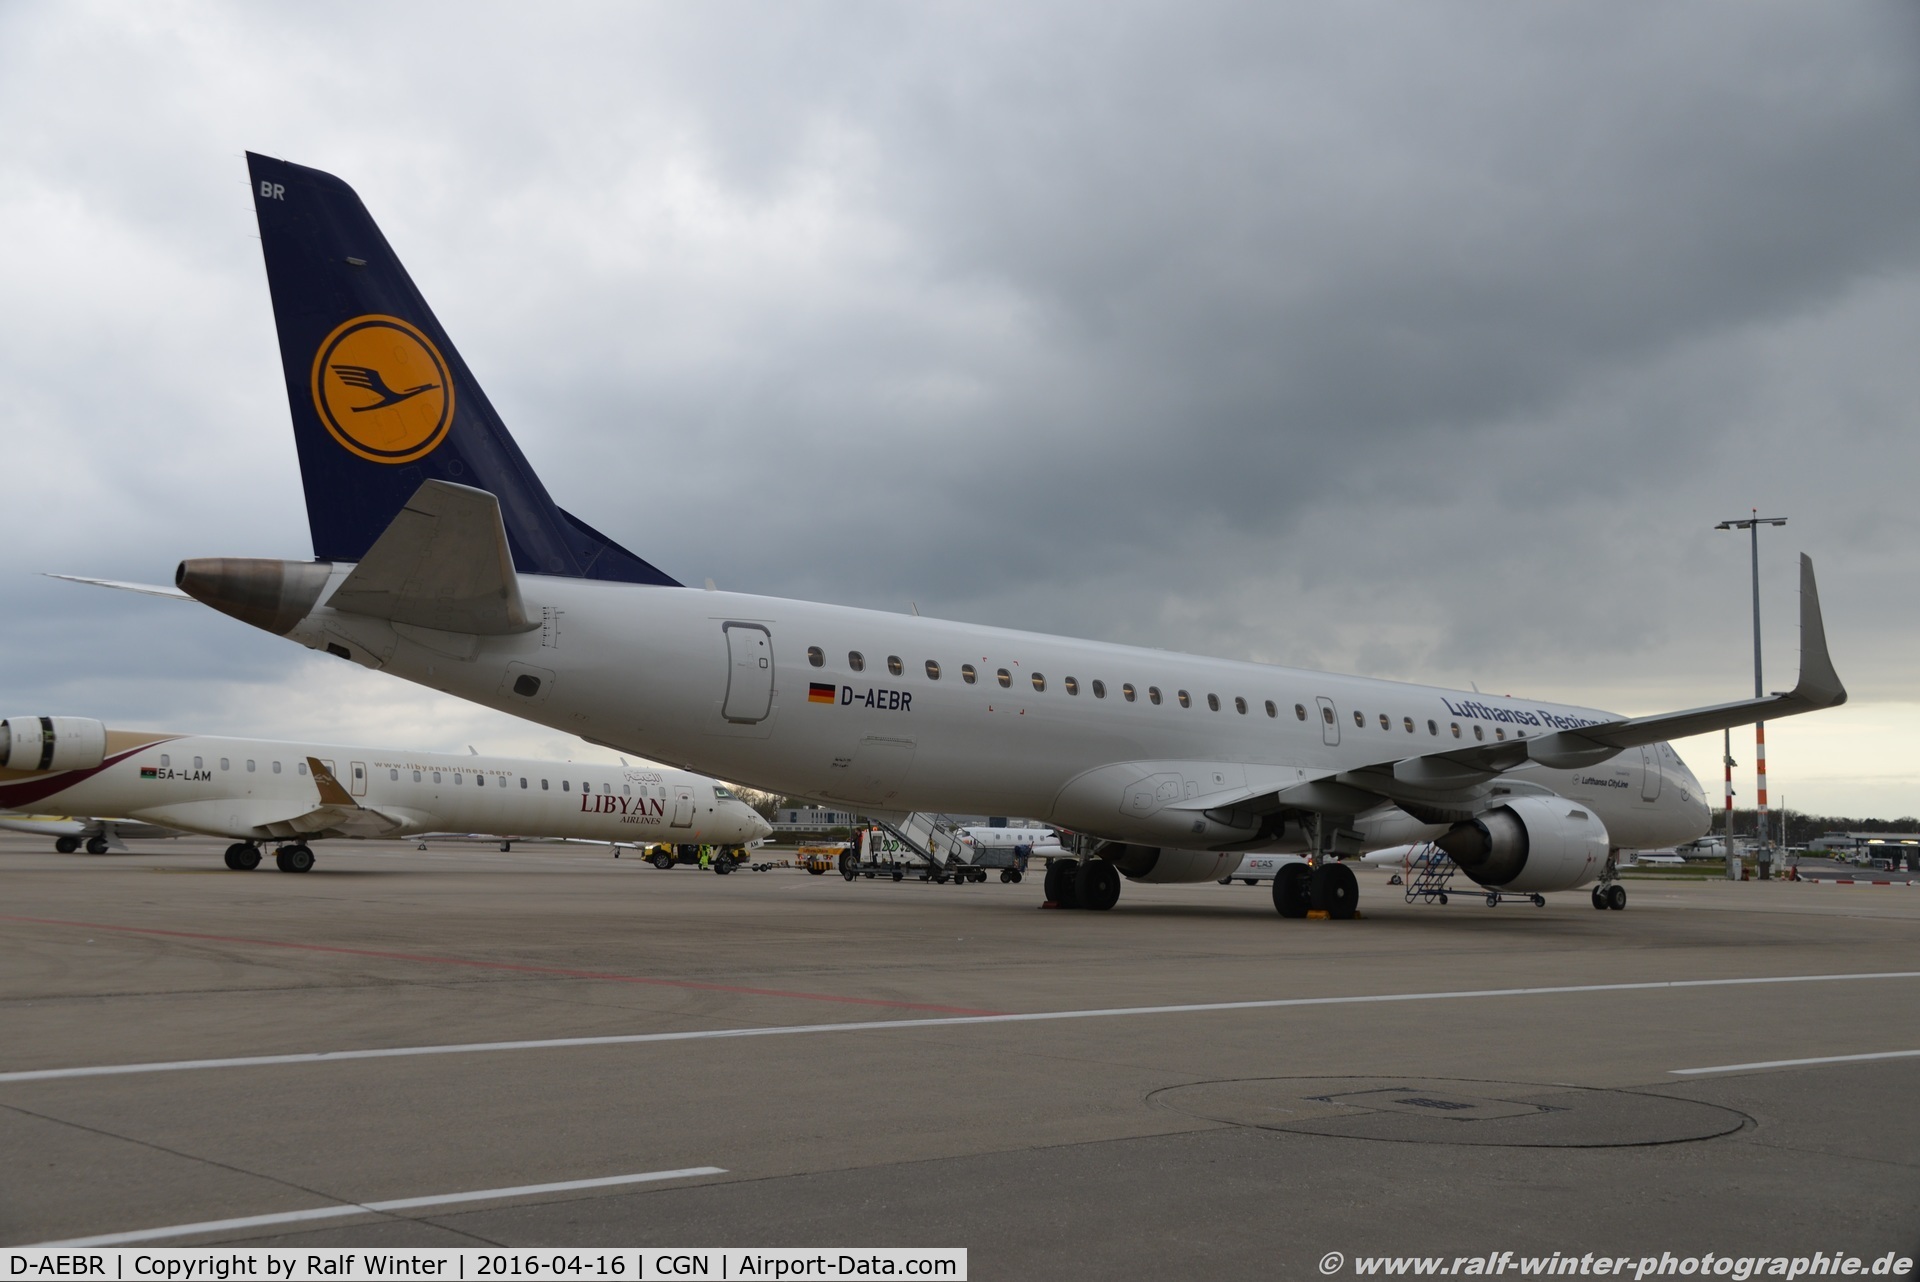 D-AEBR, 2012 Embraer 195LR  (ERJ-190-200LR) C/N 19000558, Embraer ERJ-195LR 190-200LR - CL CLH Lufthansa Cityline 'Merseburg' - 19000558 - D-AEBR - 16.04.2016 - CGN